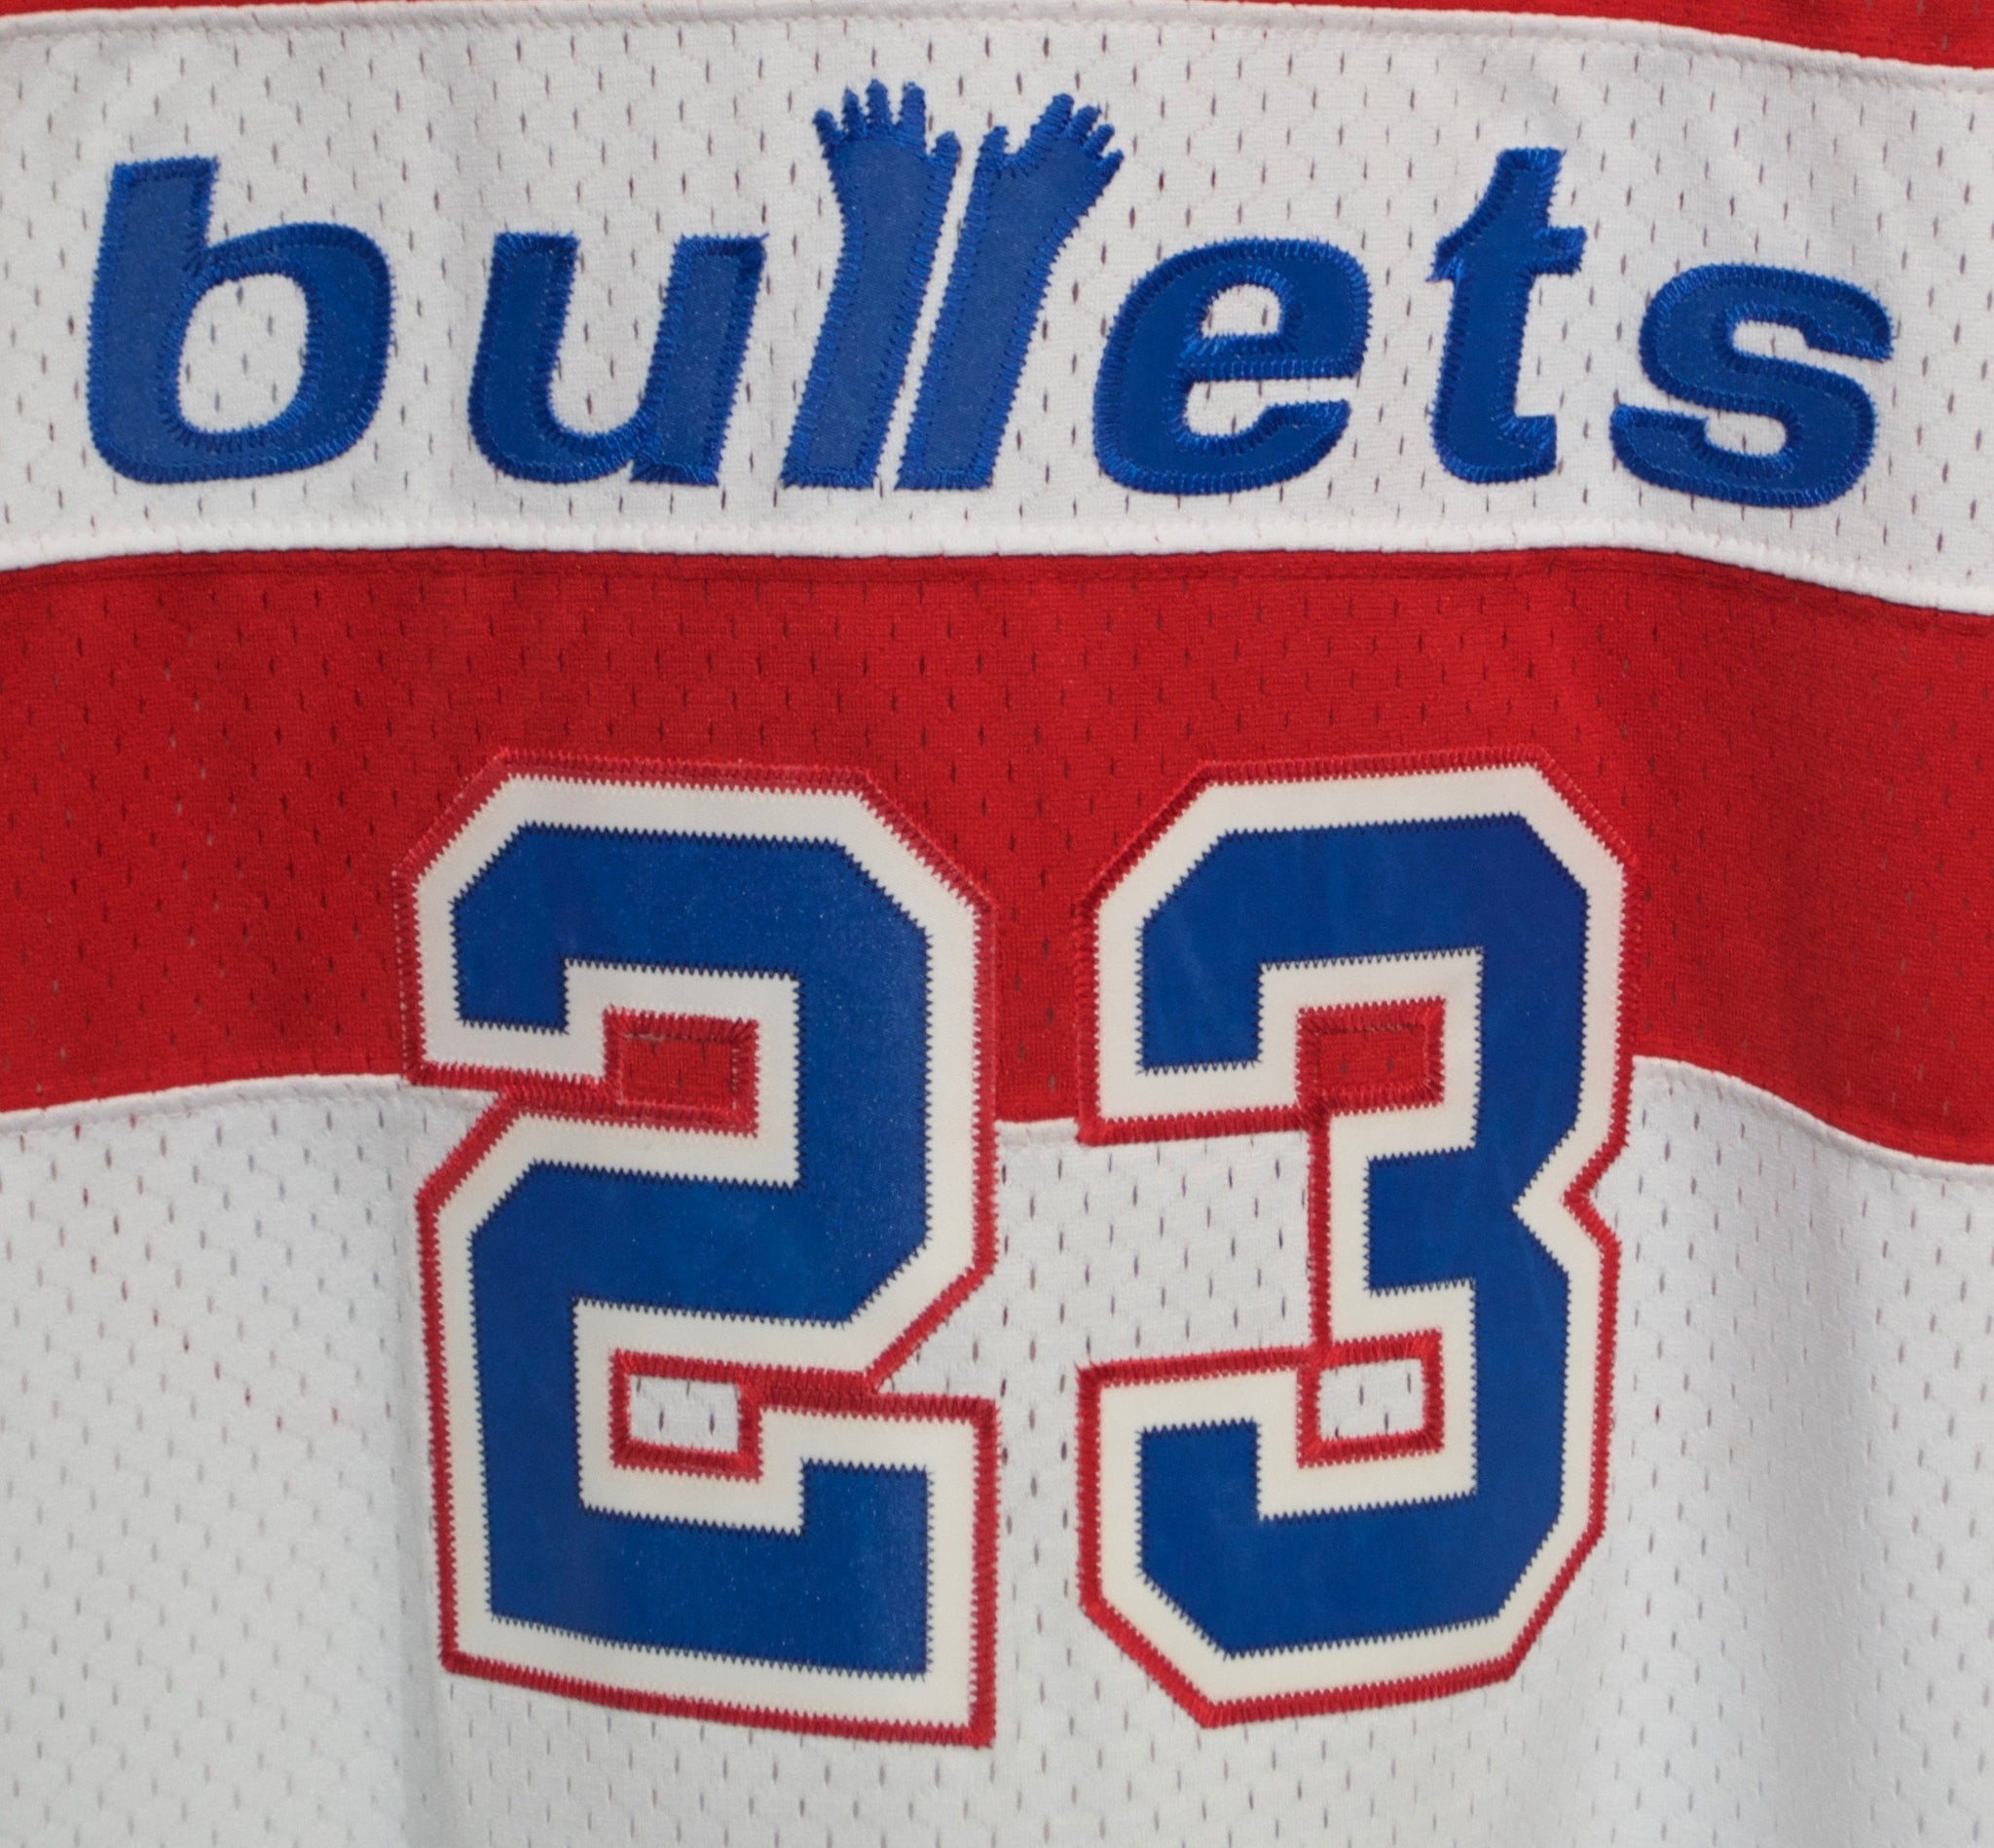 washington bullets jersey for sale